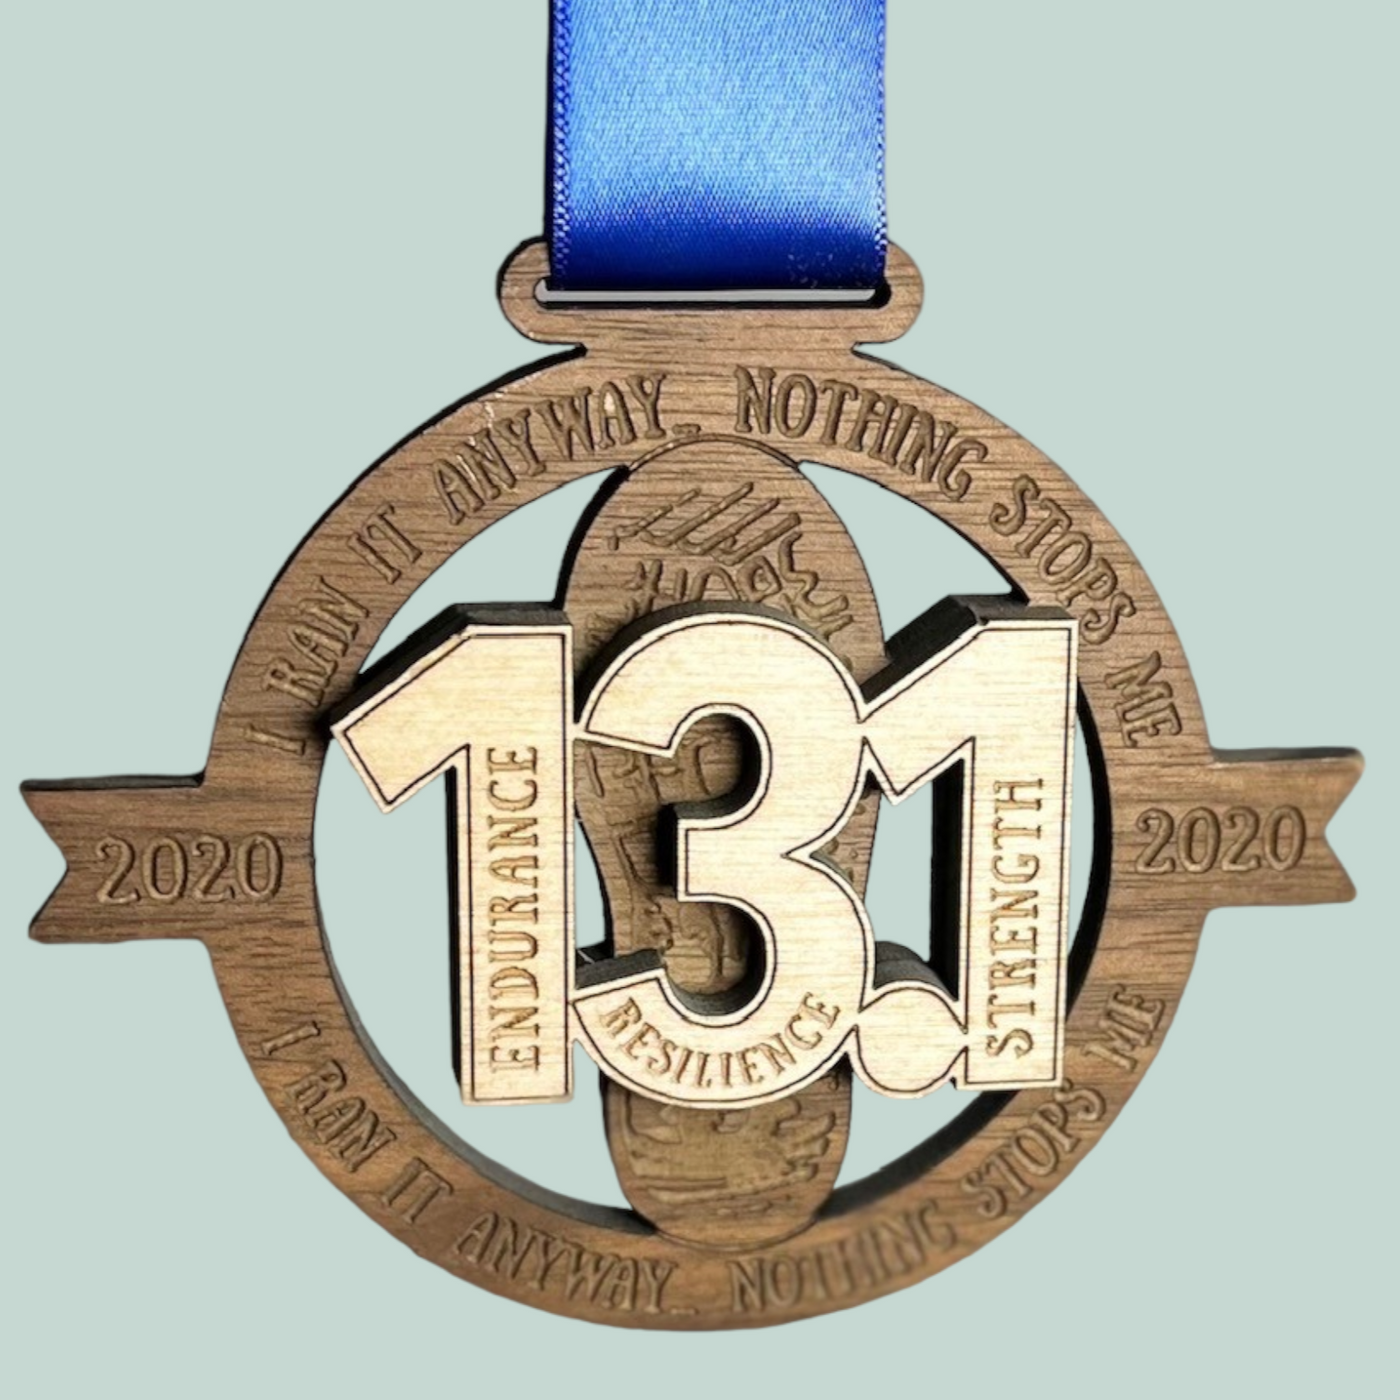 Virtual Half Marathon Medal